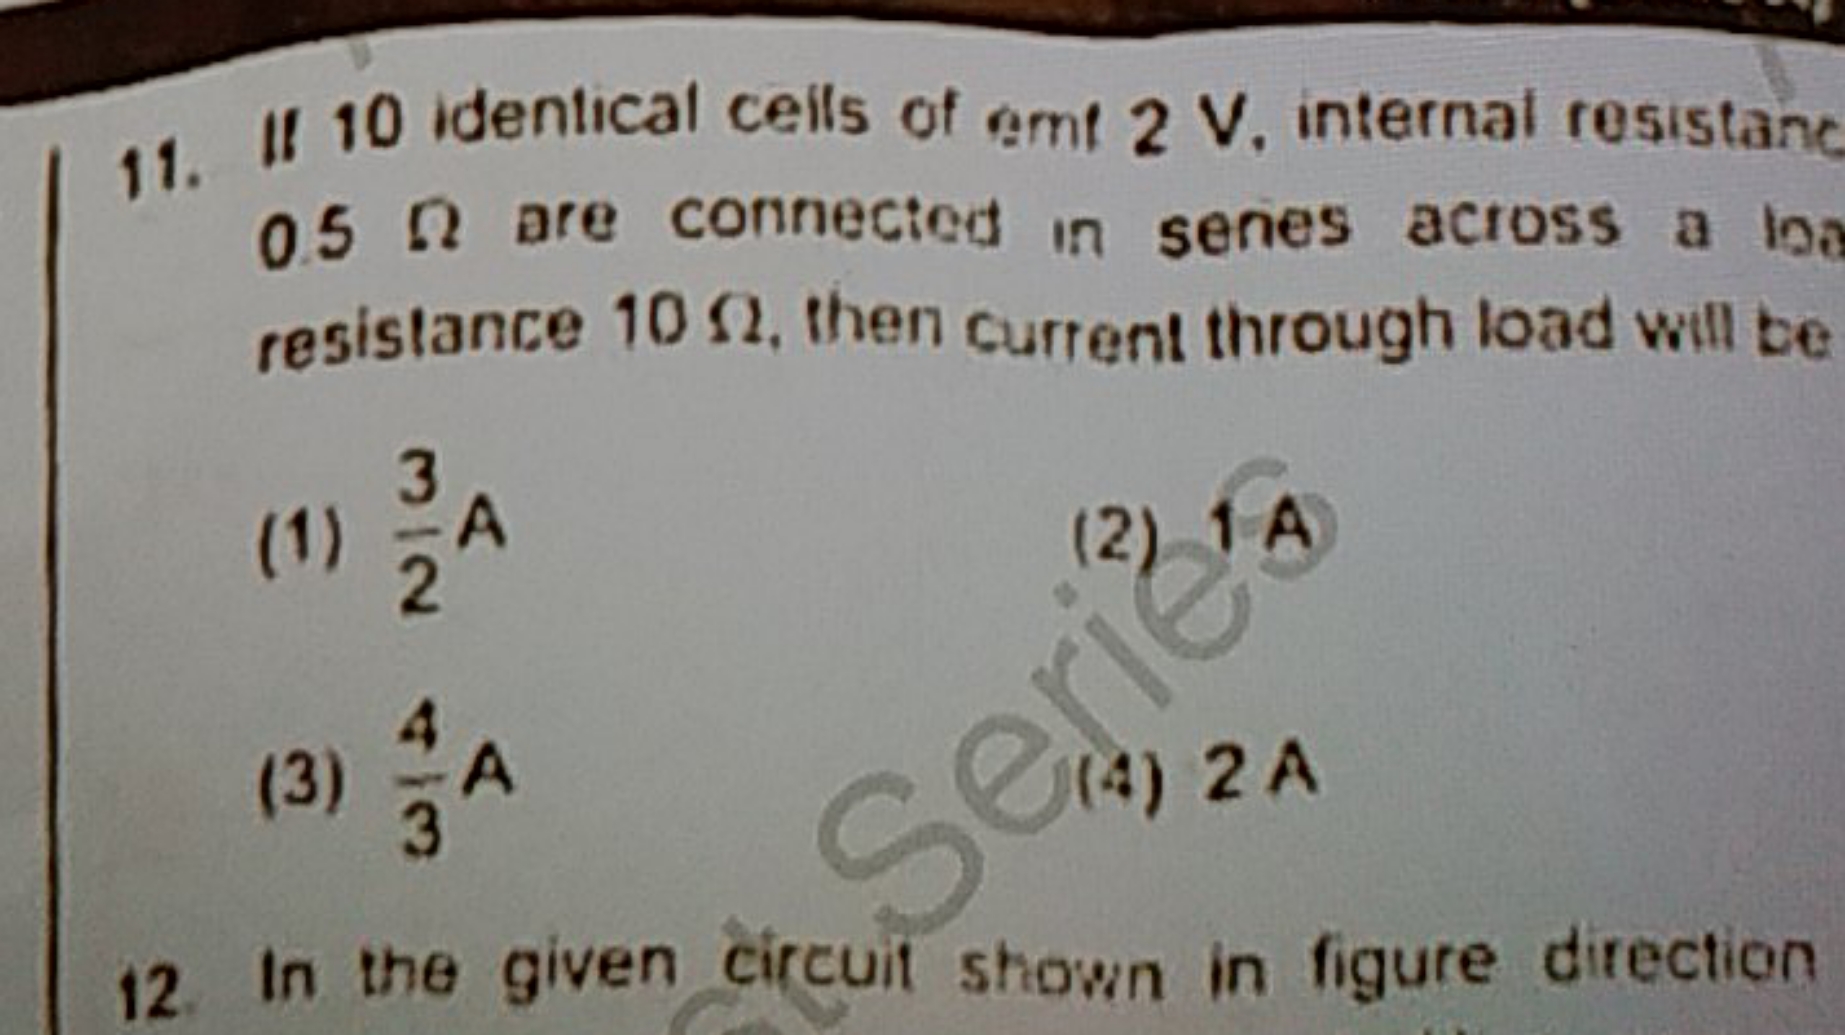 If 10 identical ceils of emt 2 V, internal resistane 0.5Ω are connecie